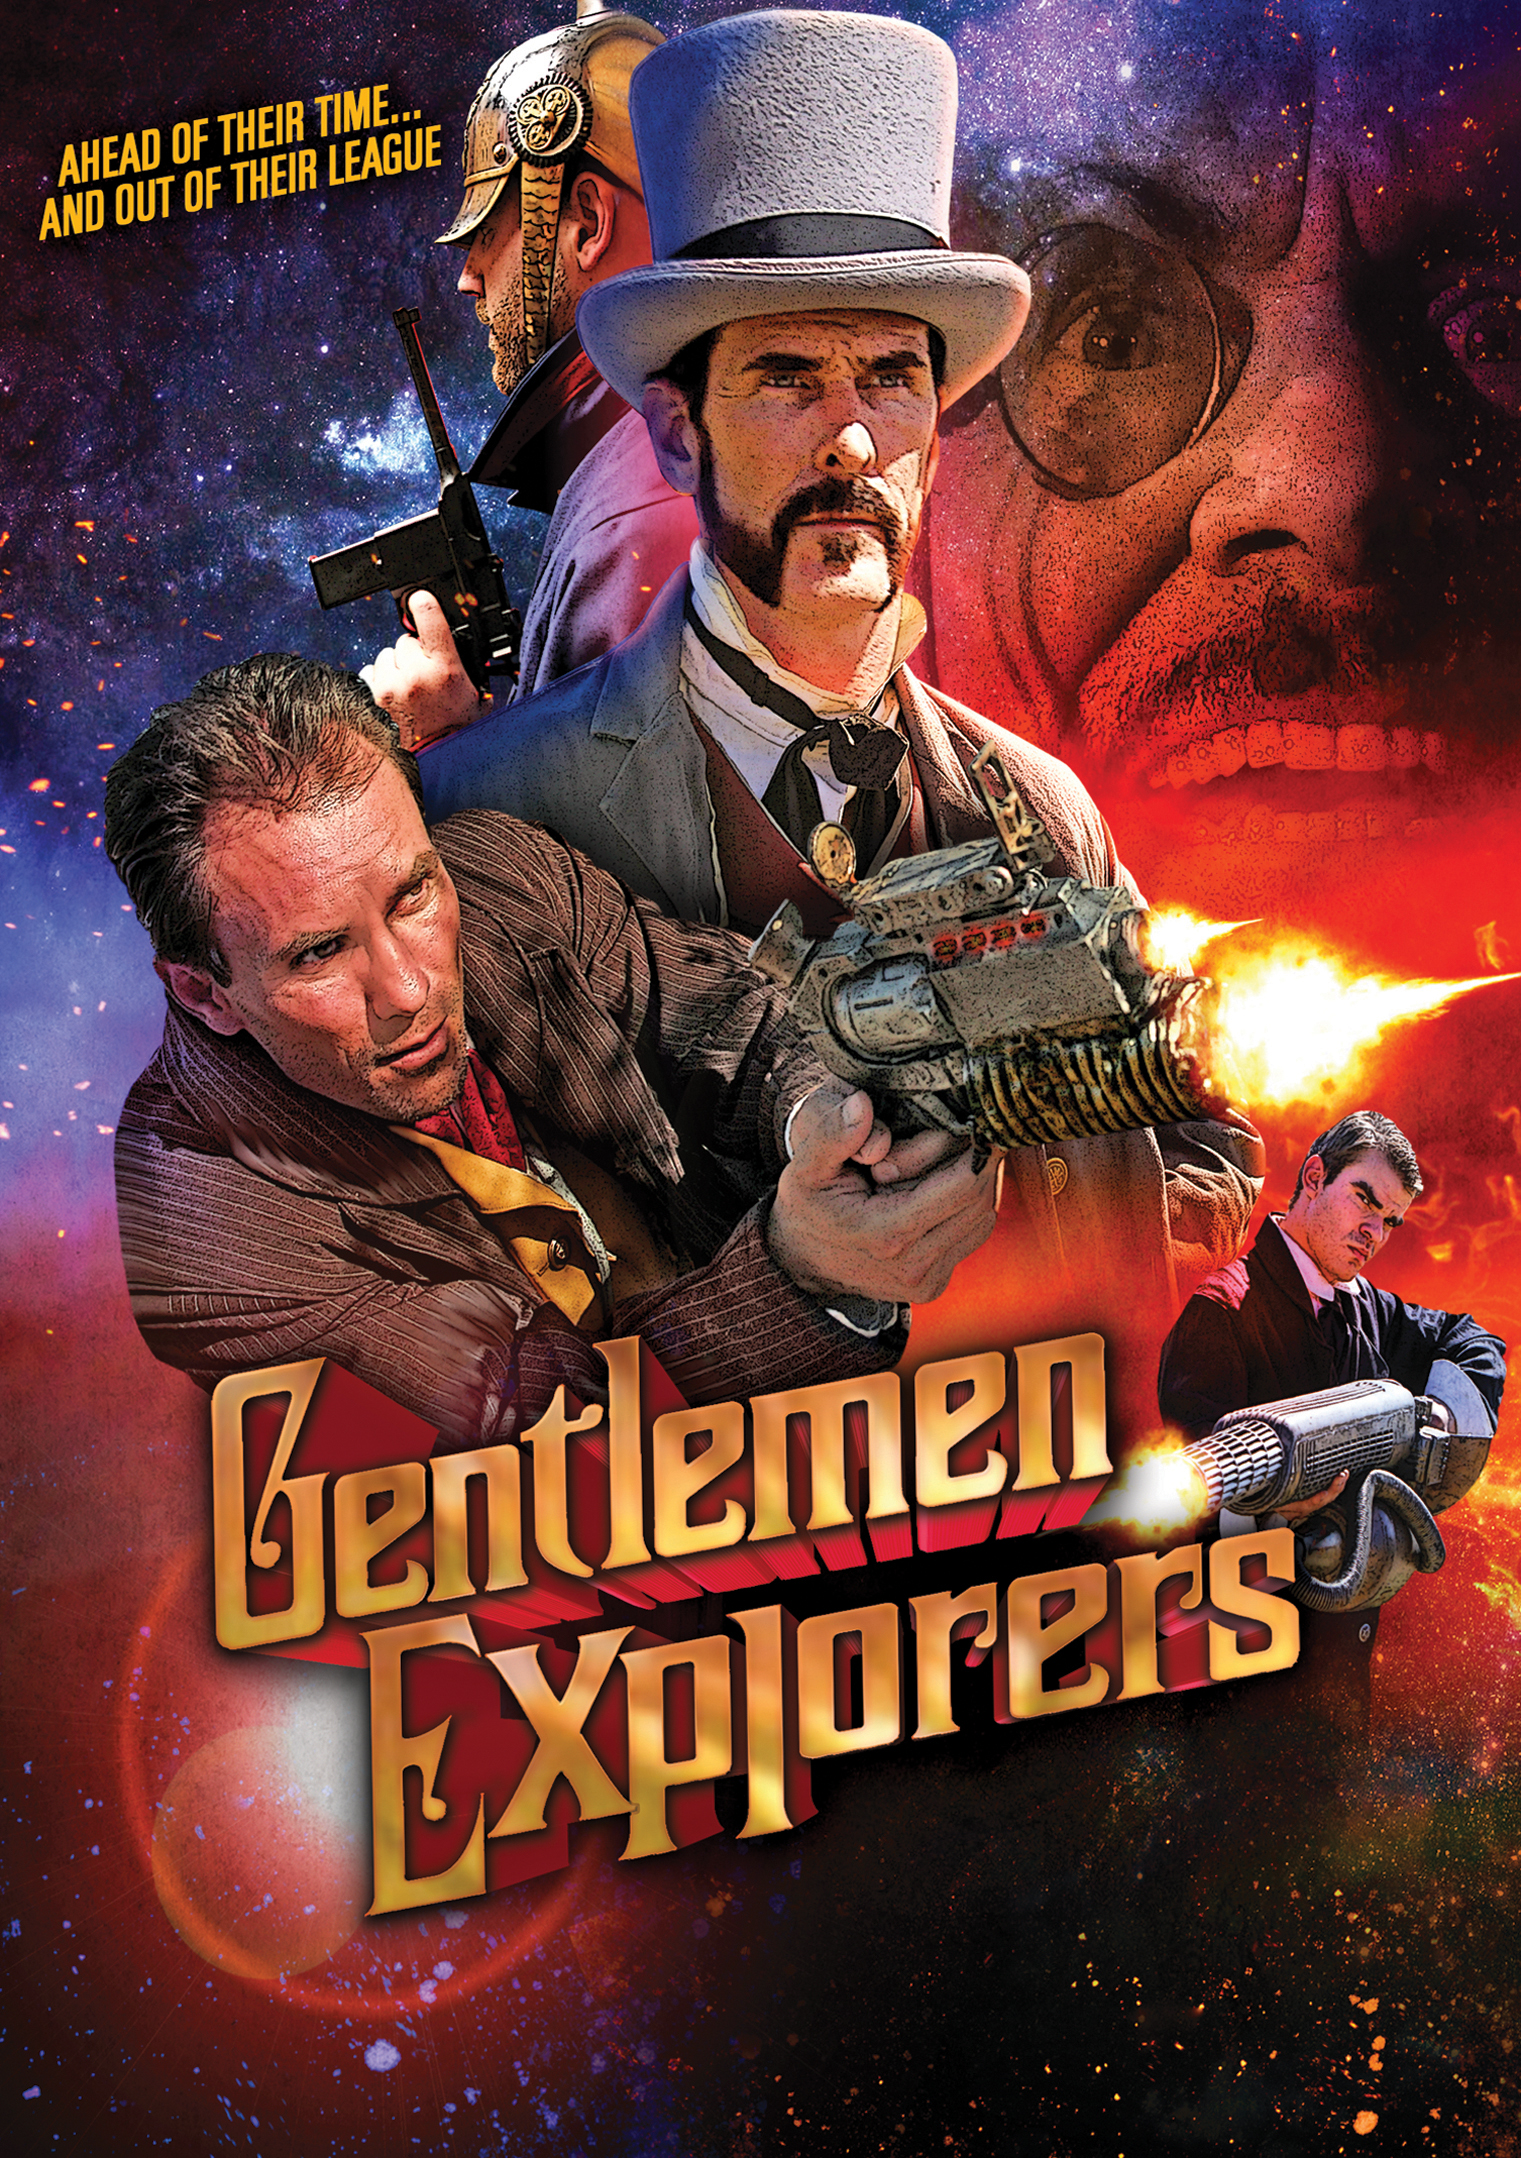 Gentlemen Explorers (2013) - Matt Snead | Synopsis, Characteristics, Moods, Themes and ...